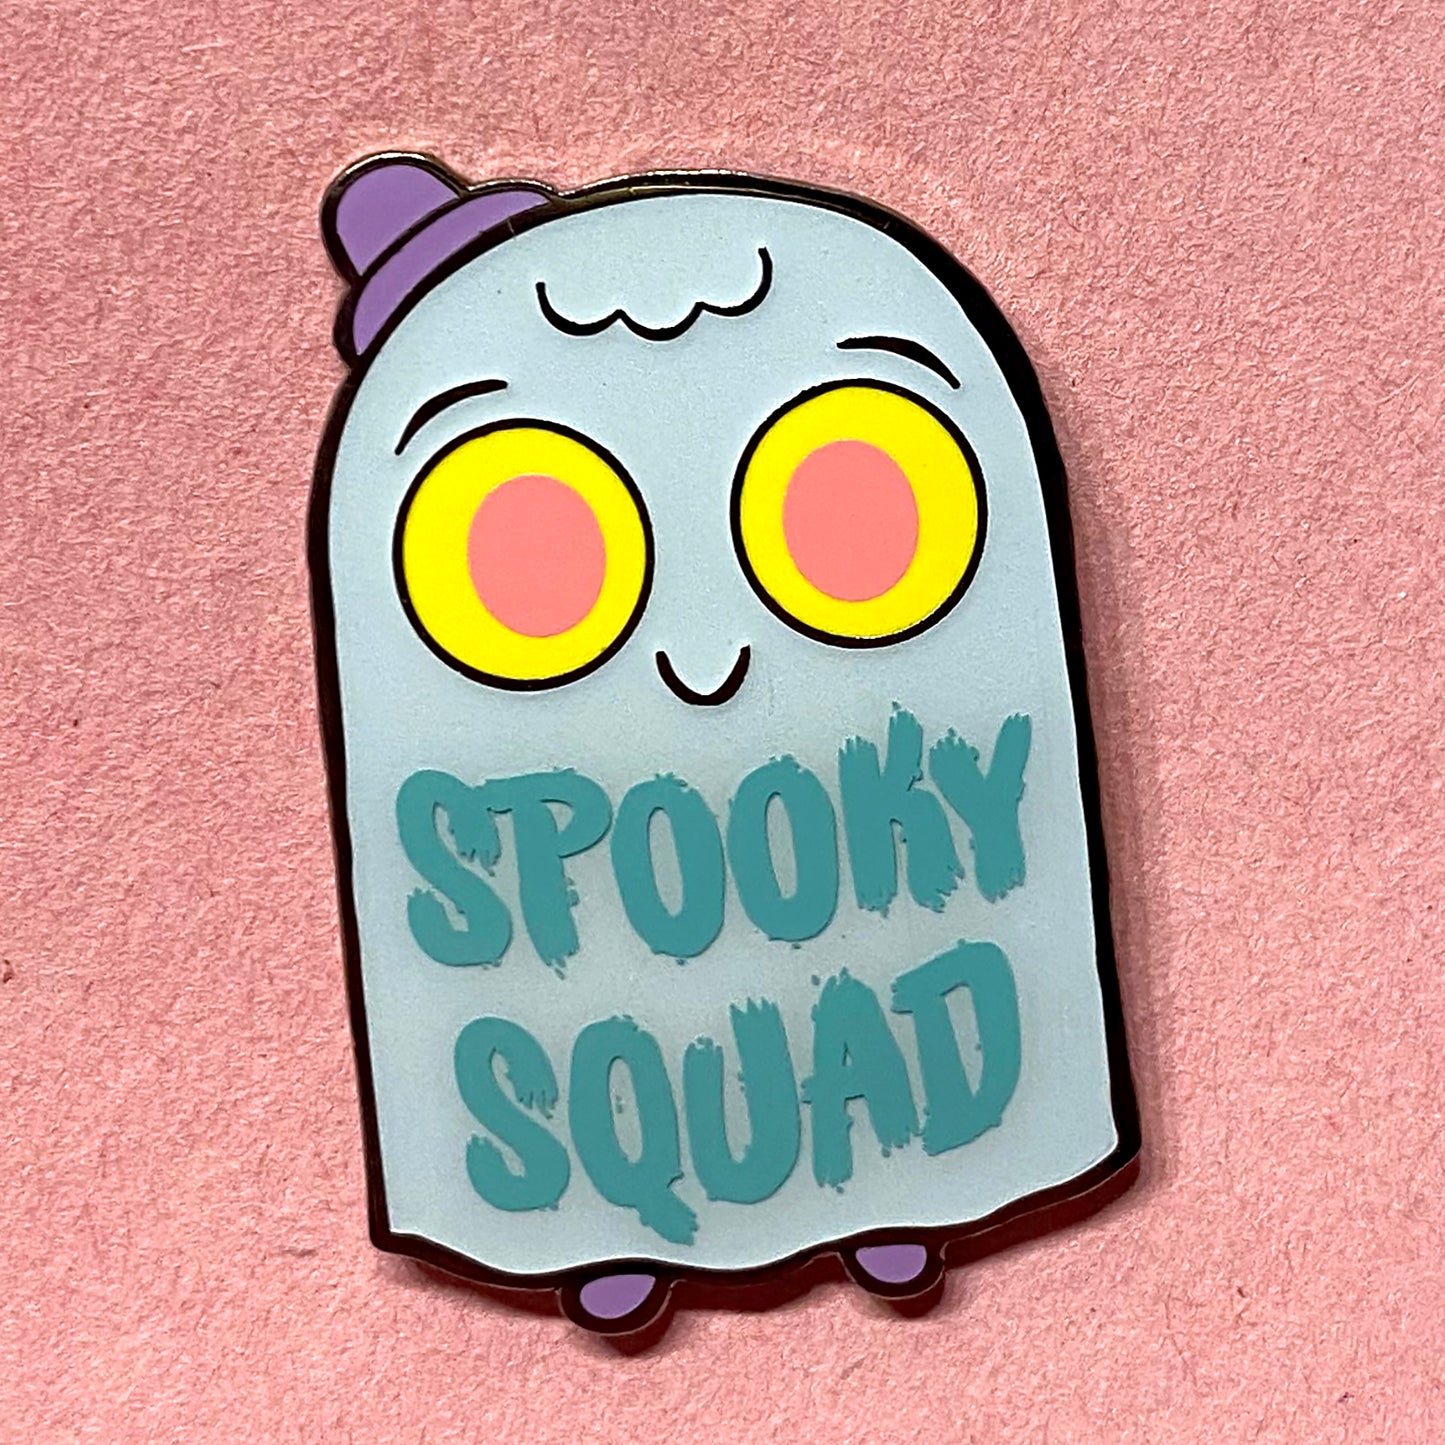 "Spooky Squad" hard enamel pin